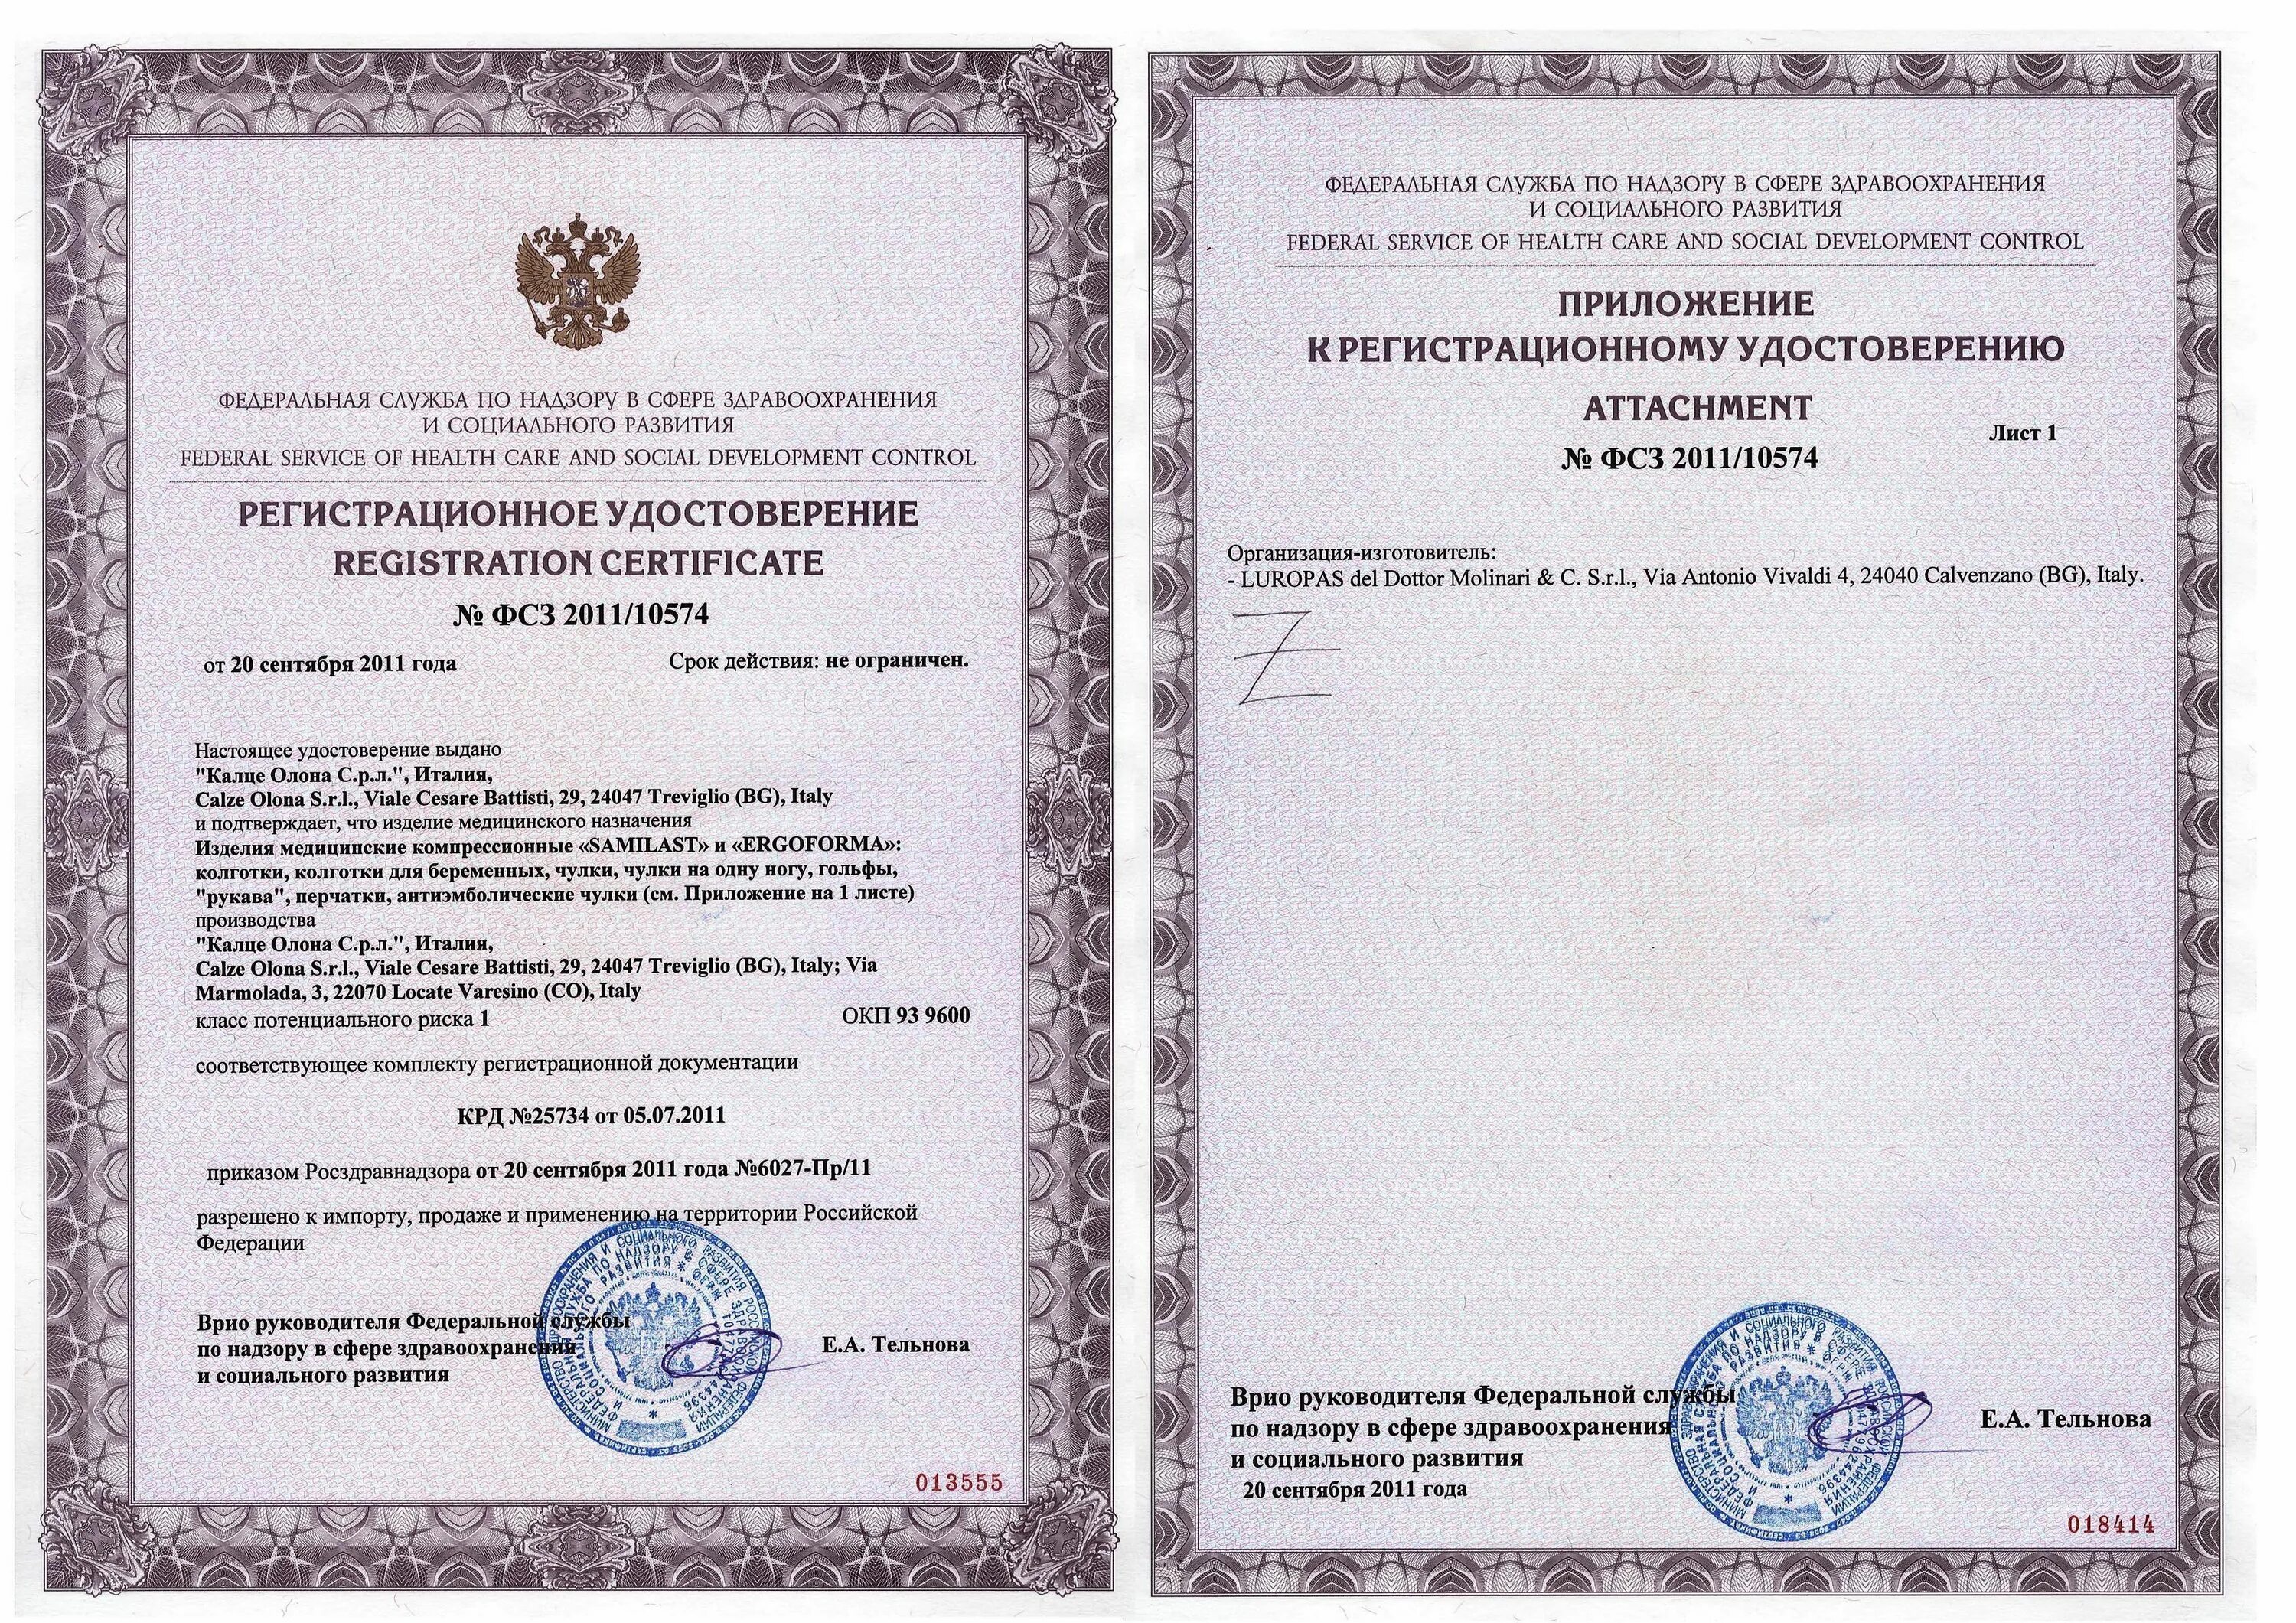 Https roszdravnadzor ru services licenses